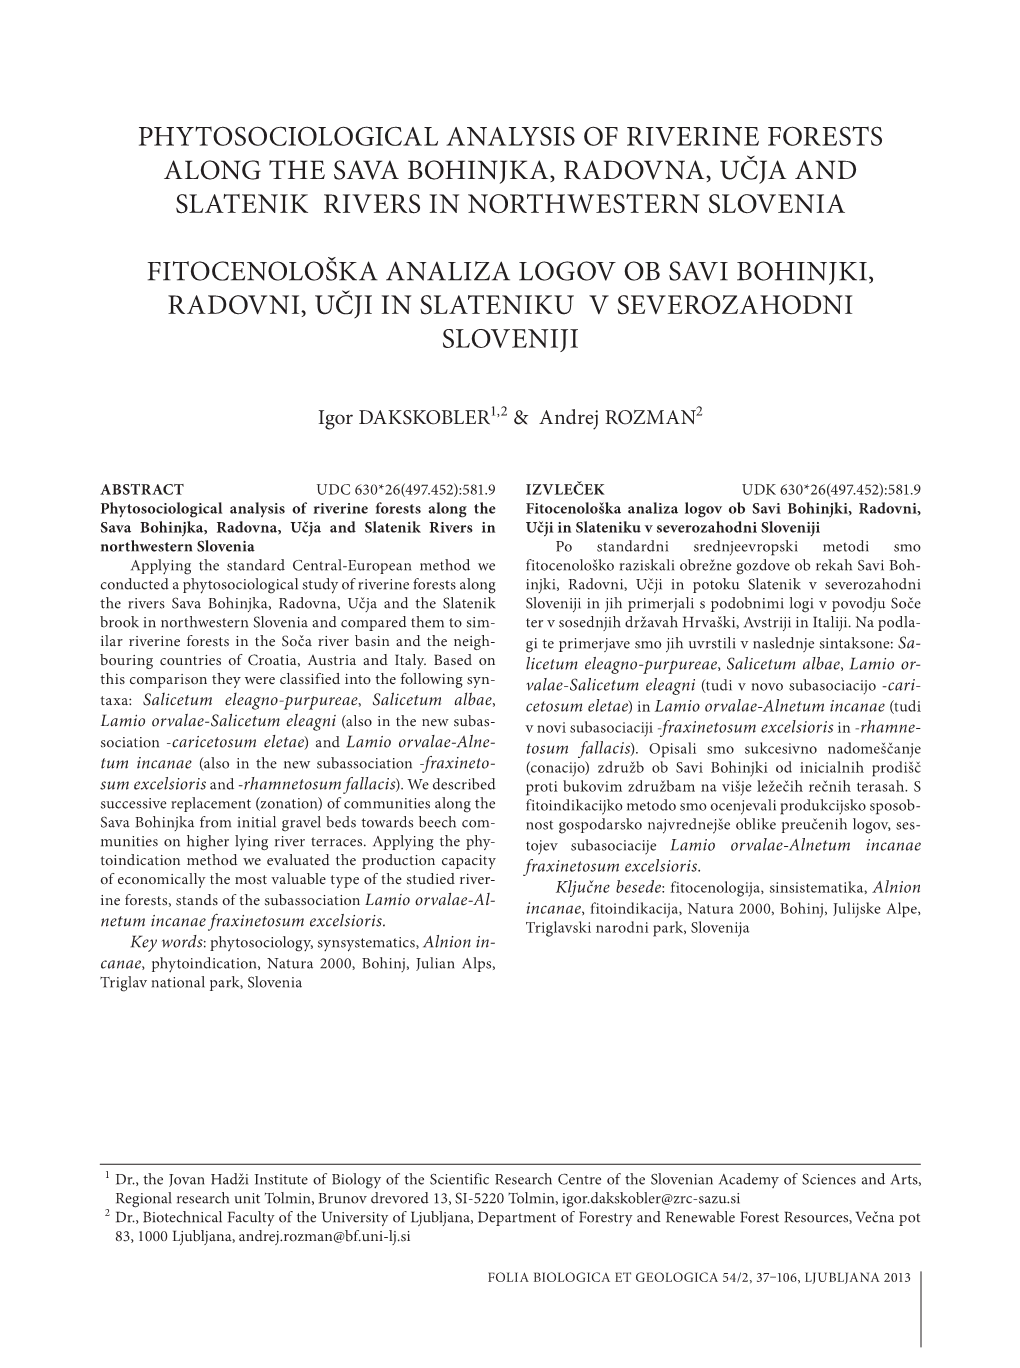 Phytosociological Analysis of Riverine Forests Along the Sava Bohinjka, Radovna, Učja and Slatenik Rivers in Northwestern Slovenia